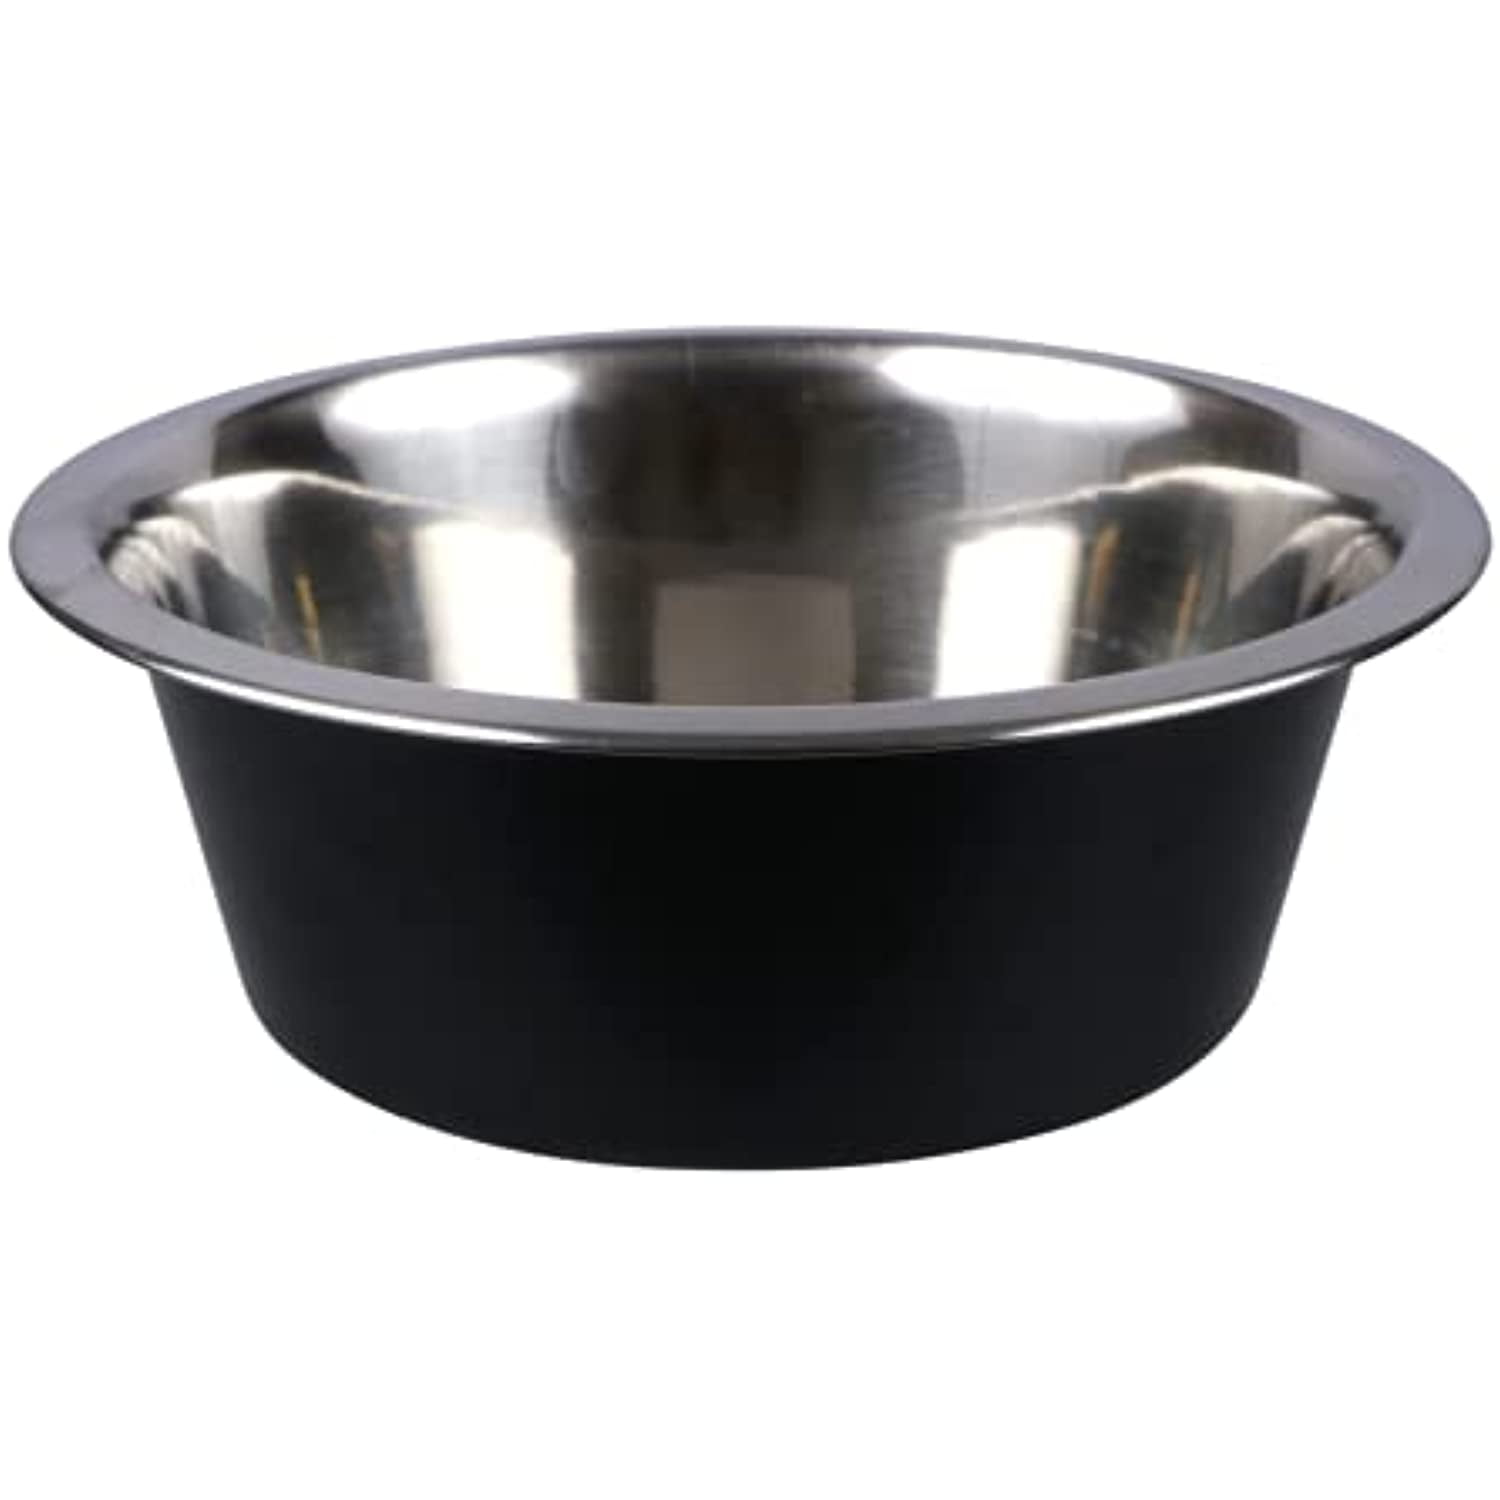 Basics Stainless Steel Dog Bowl - Set of 2